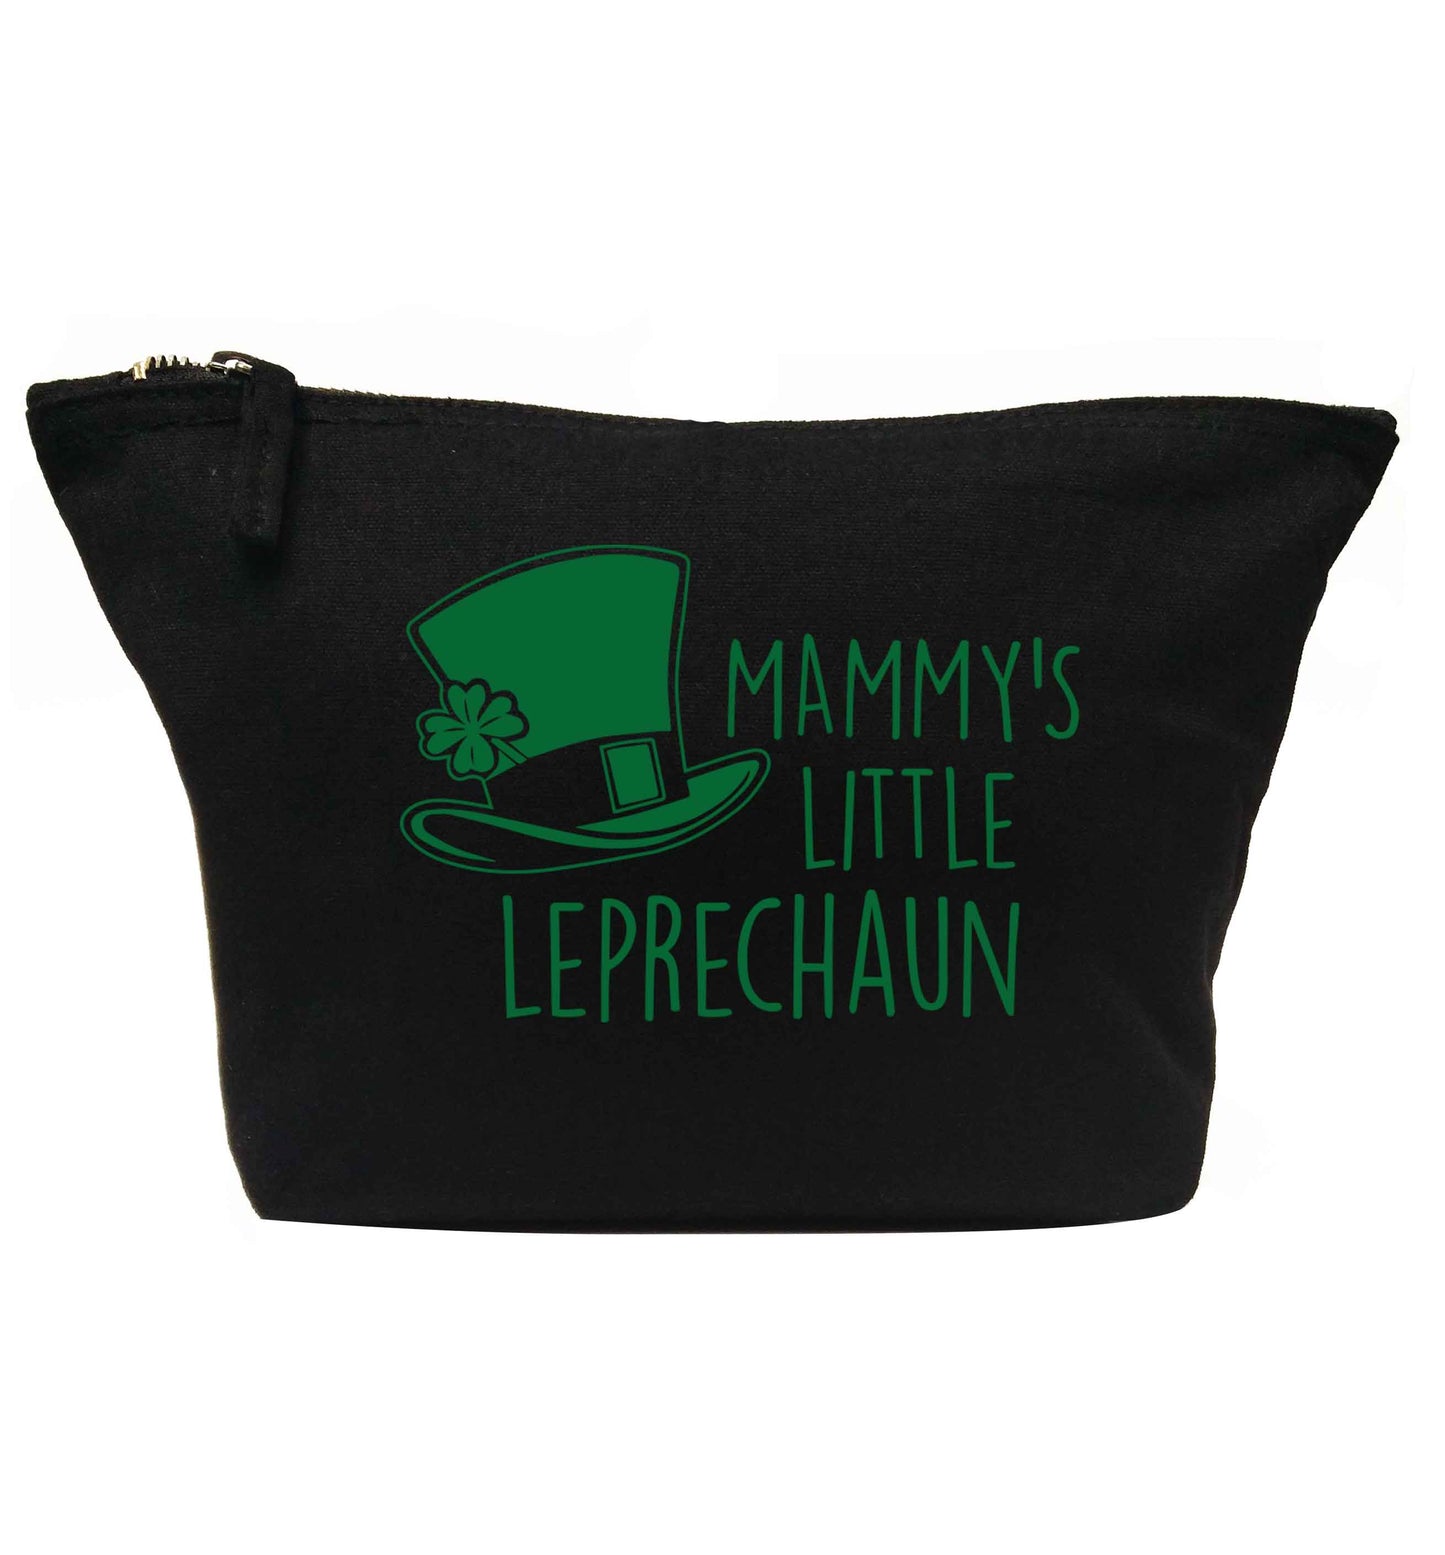 Mammy's little leprechaun | Makeup / wash bag